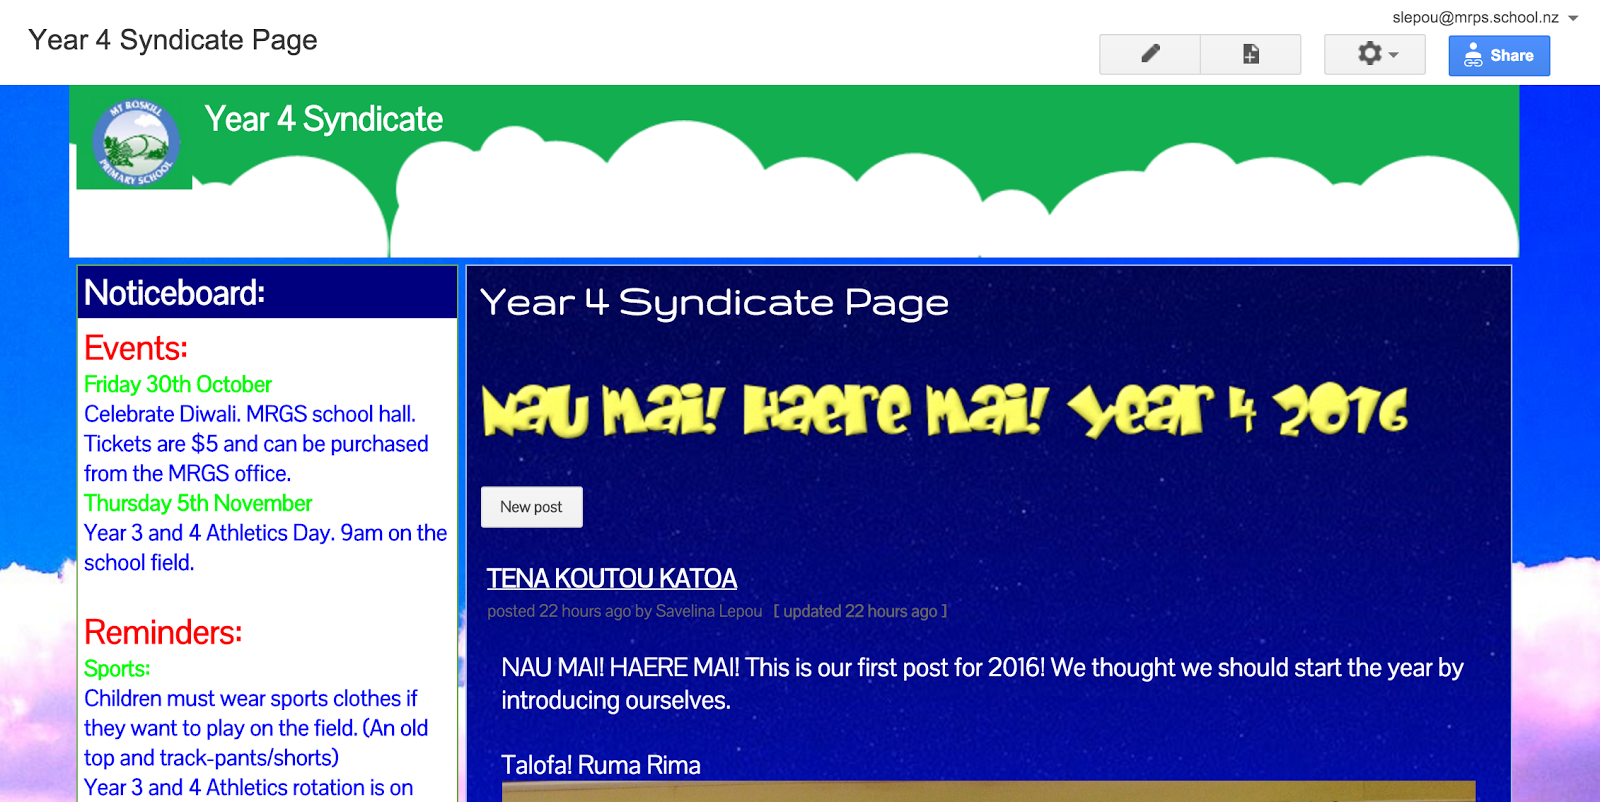 Year 4 Syndicate Webpage